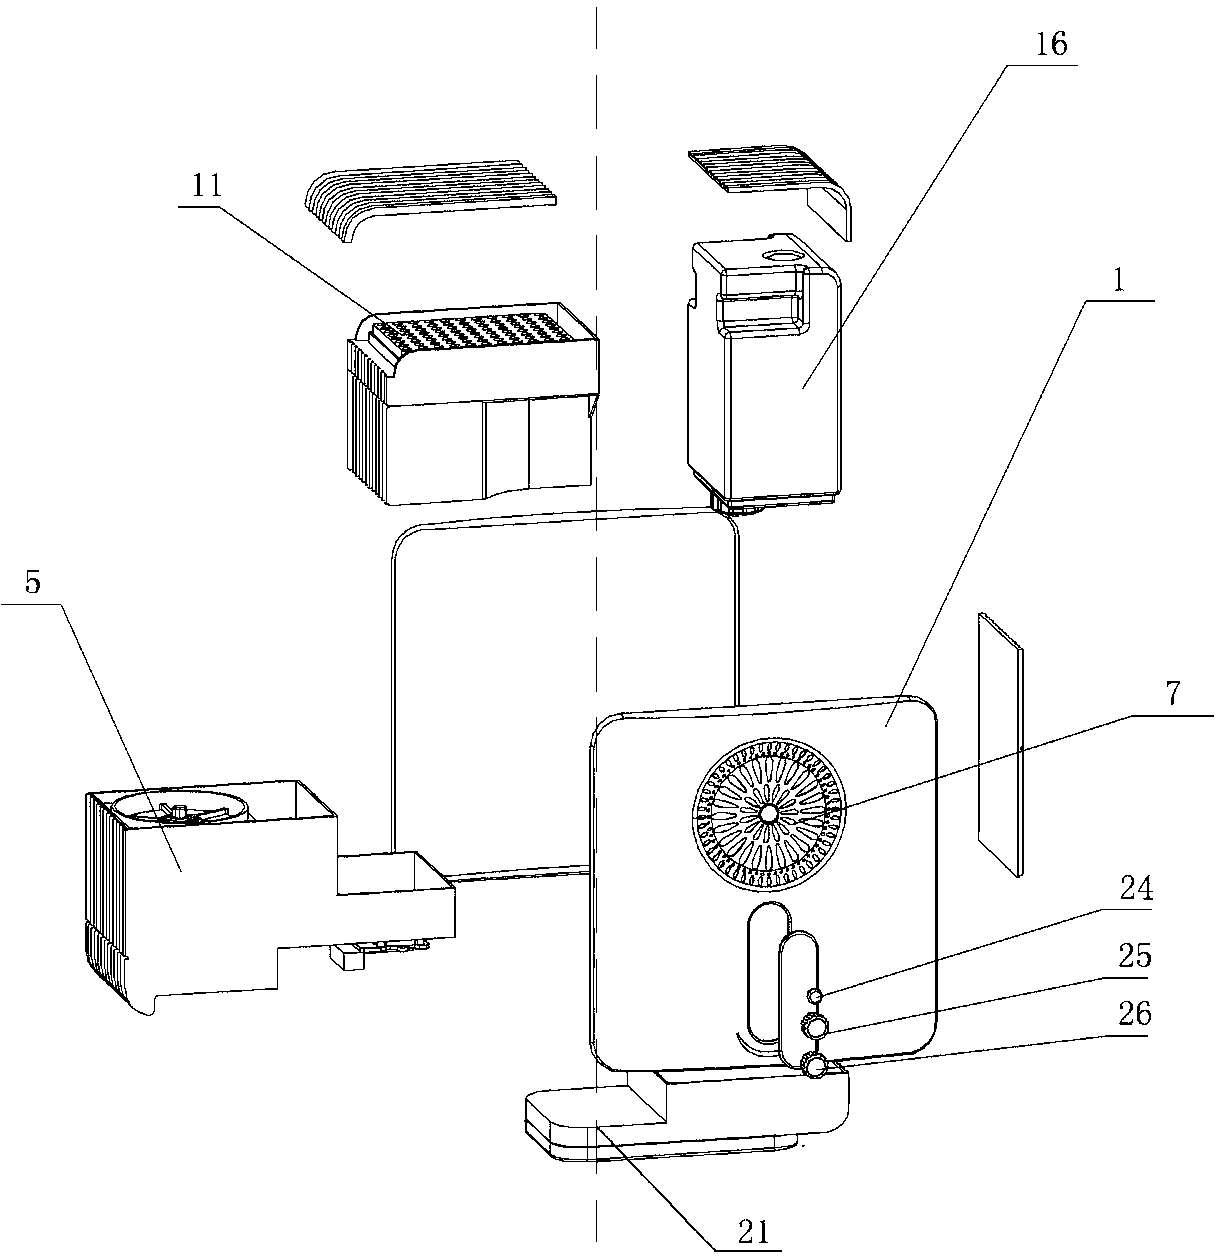 Air purification humidifier